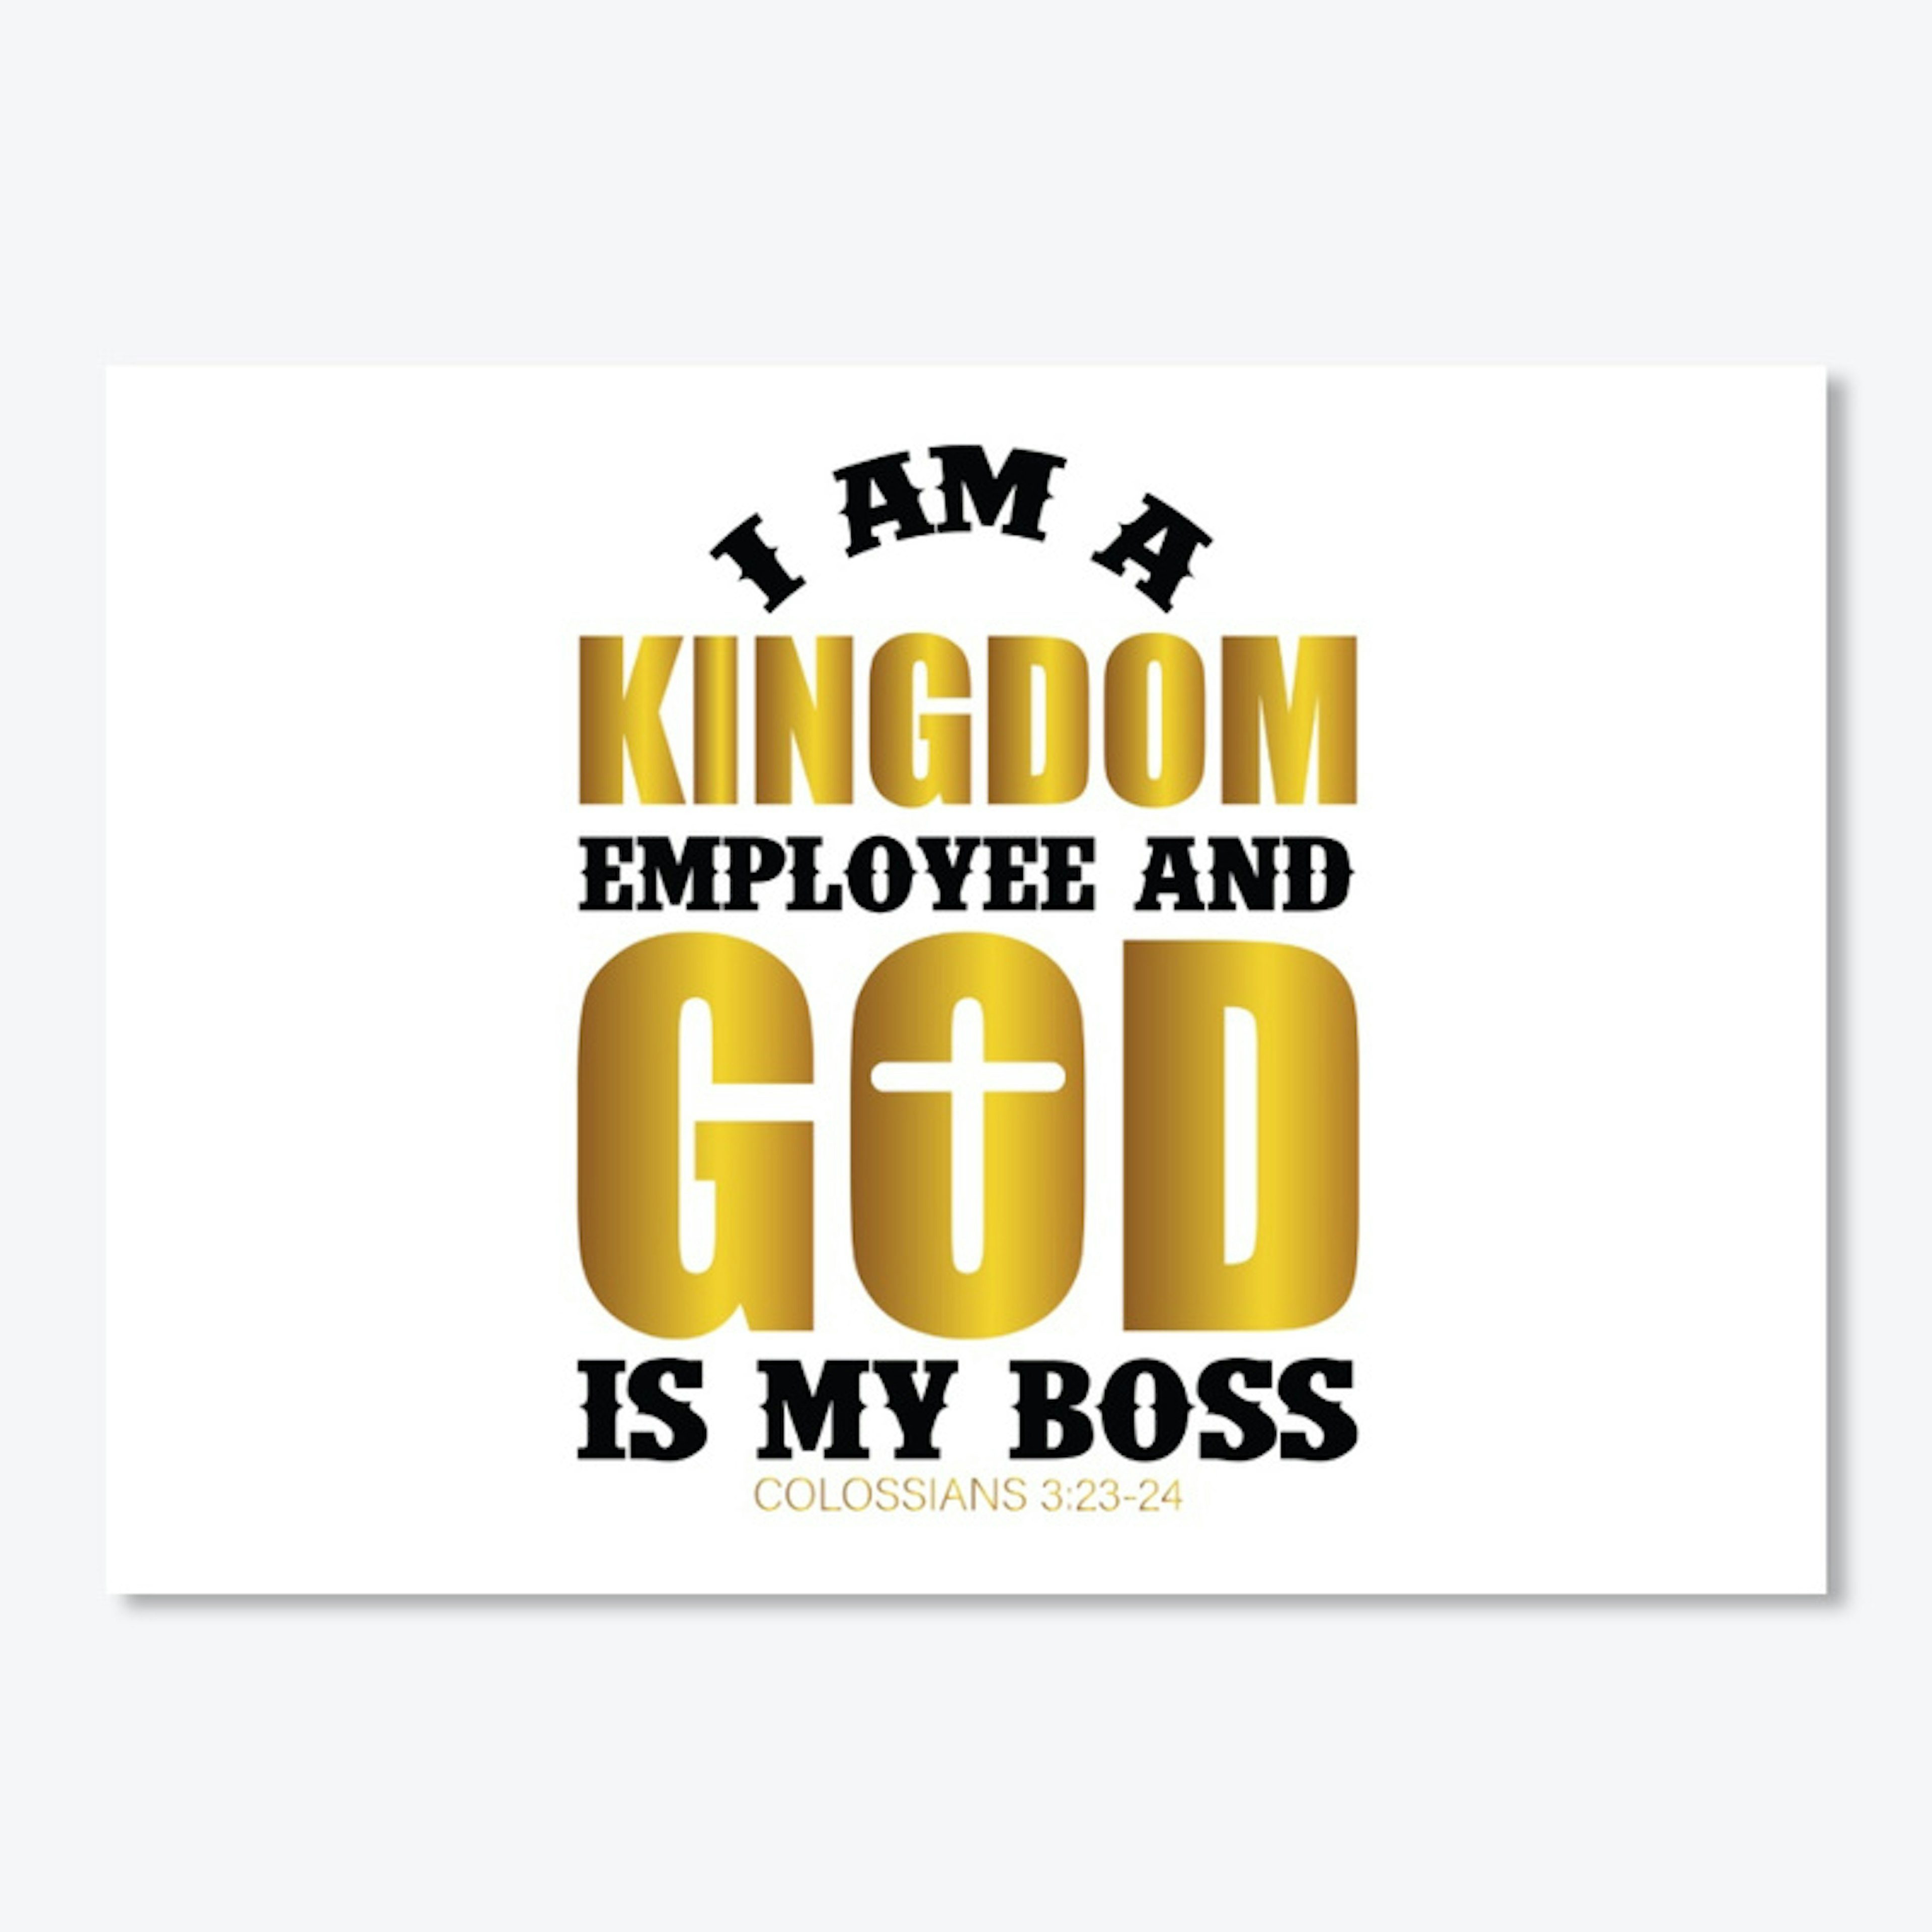 I am a kingdom employee